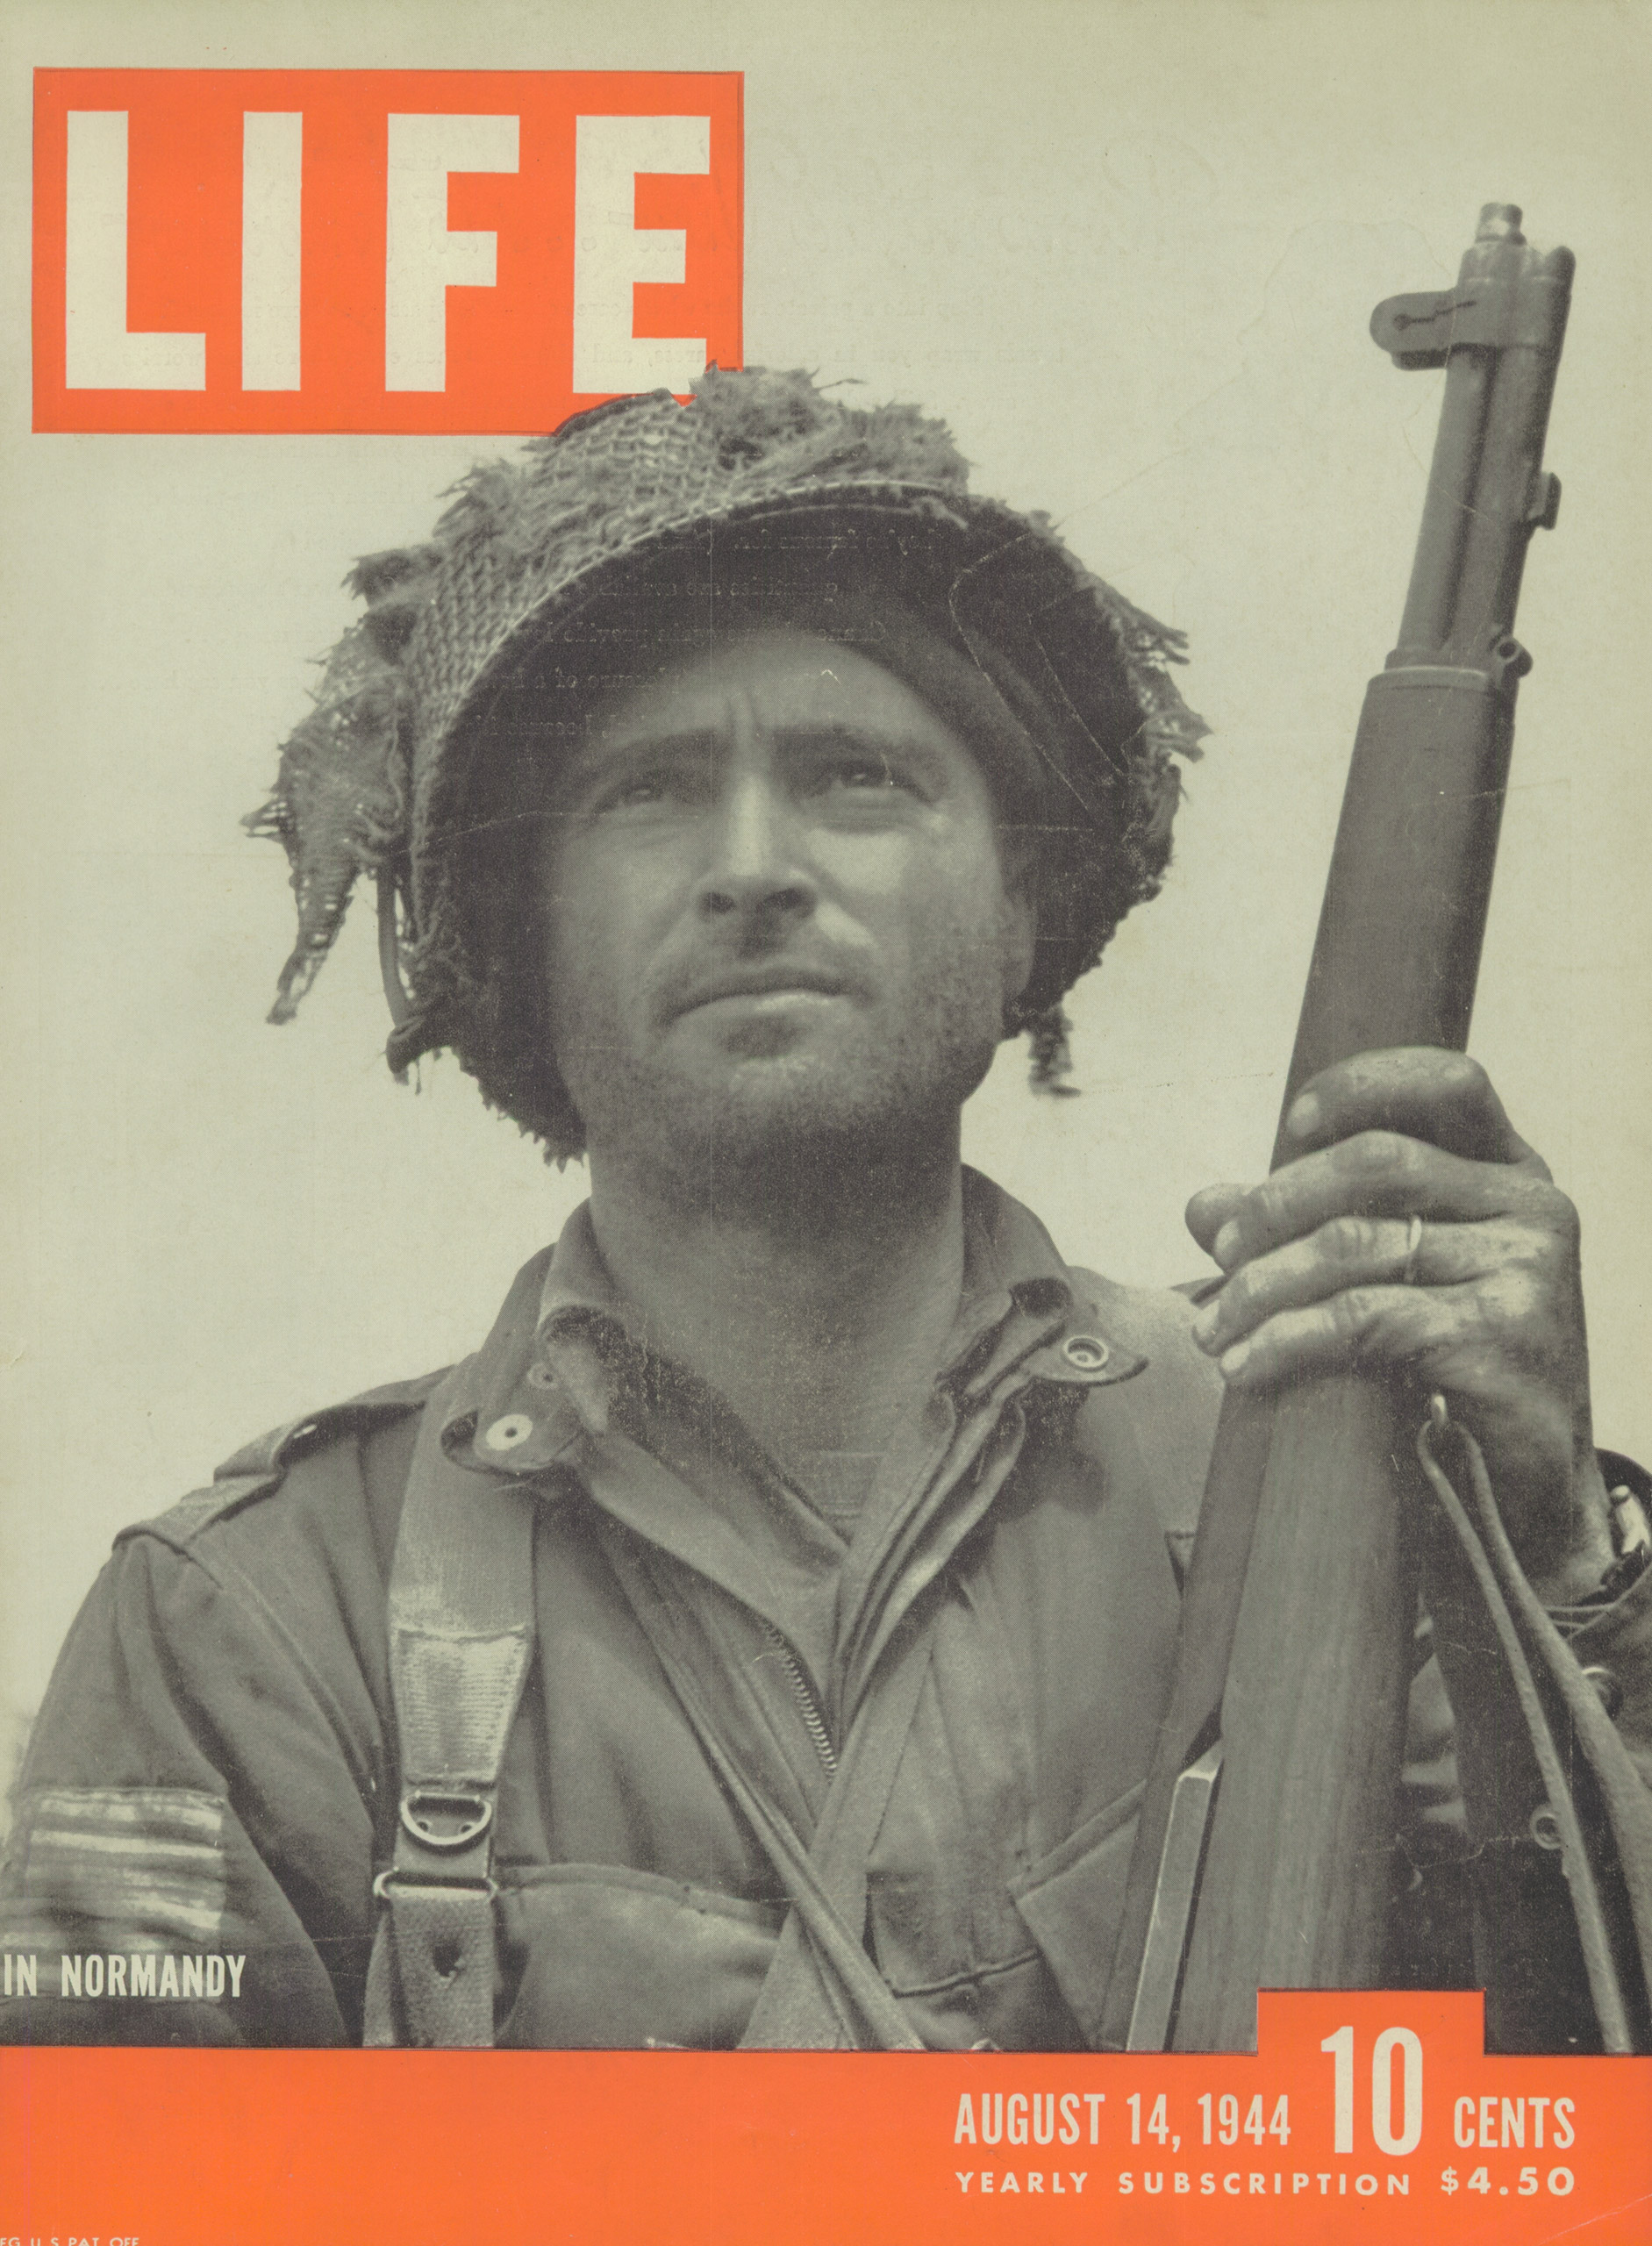 Aug. 14, 1944 cover of LIFE magazine.